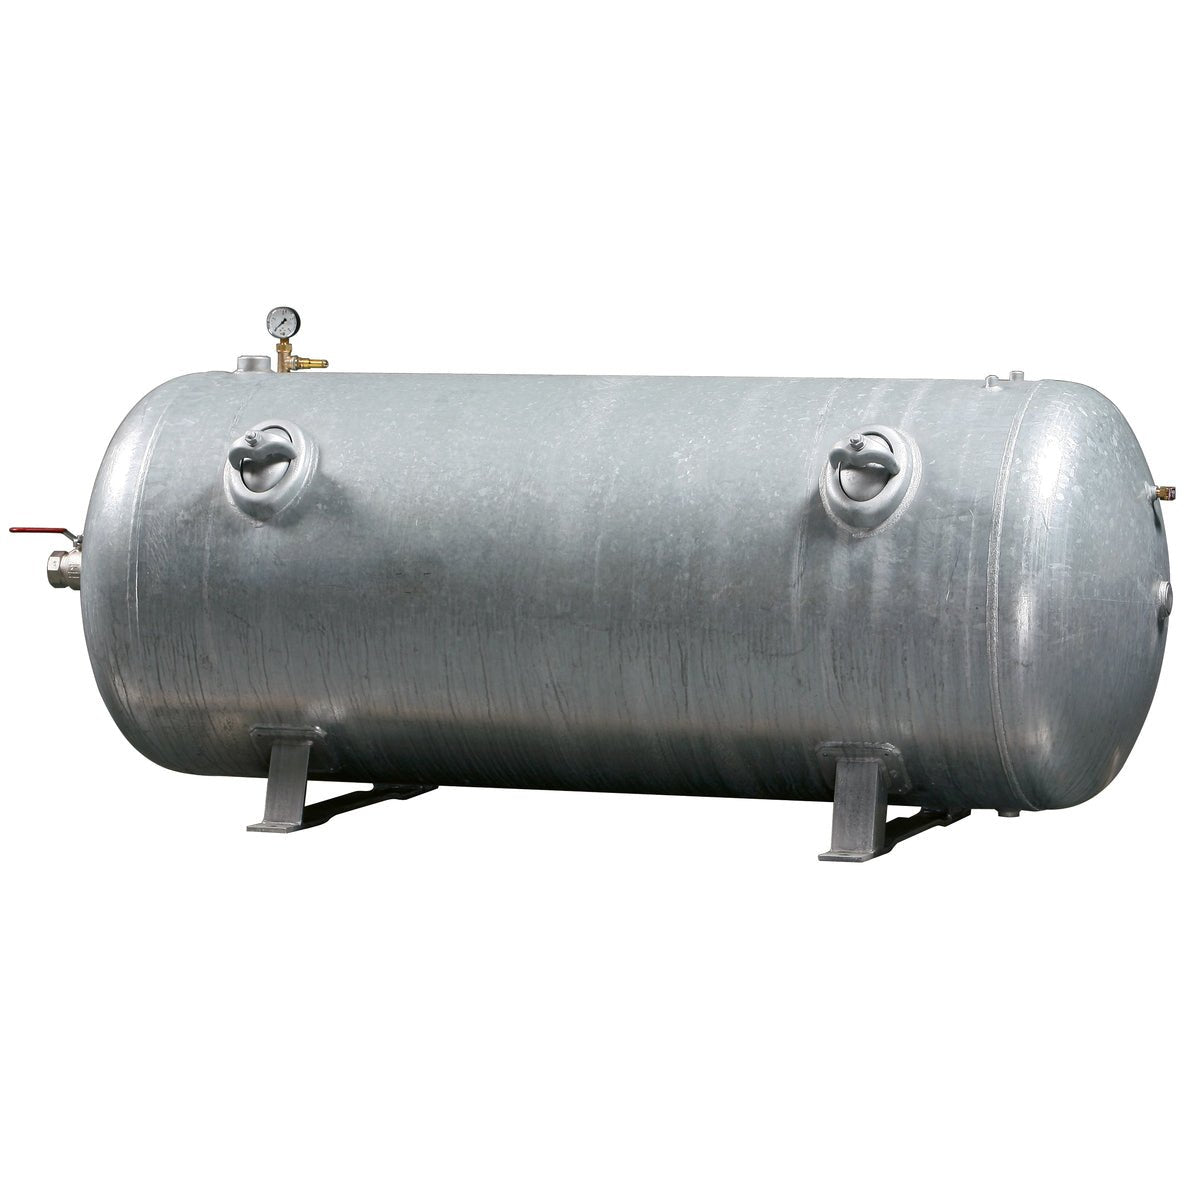 Kaeser compressed air tank 250/11 lg. CE/SPV